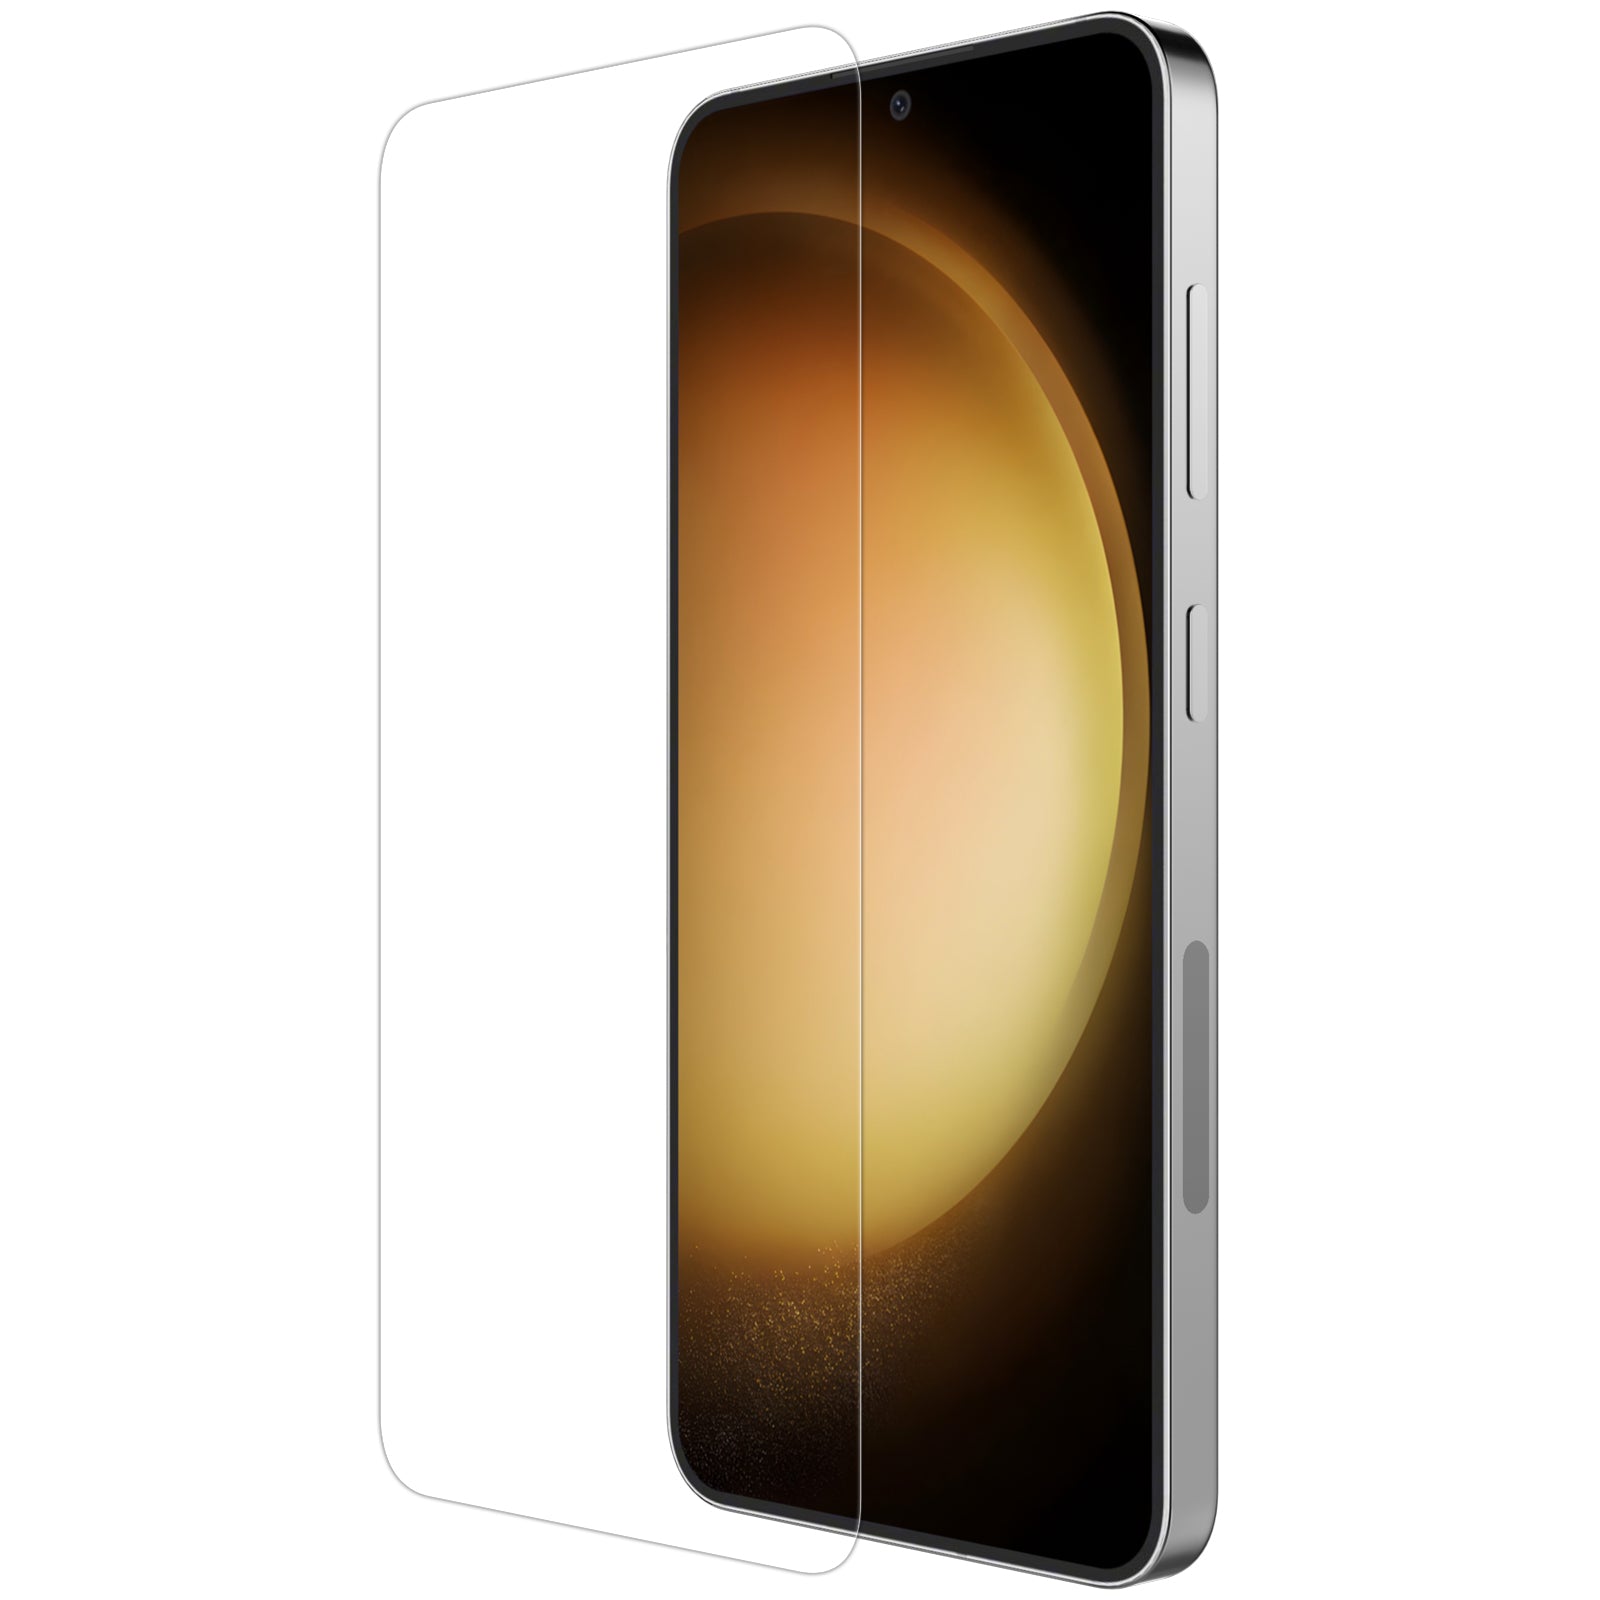 NILLKIN H+Pro for Samsung Galaxy S24 Enhanced AGC Glass Ultra Clear Screen Guard